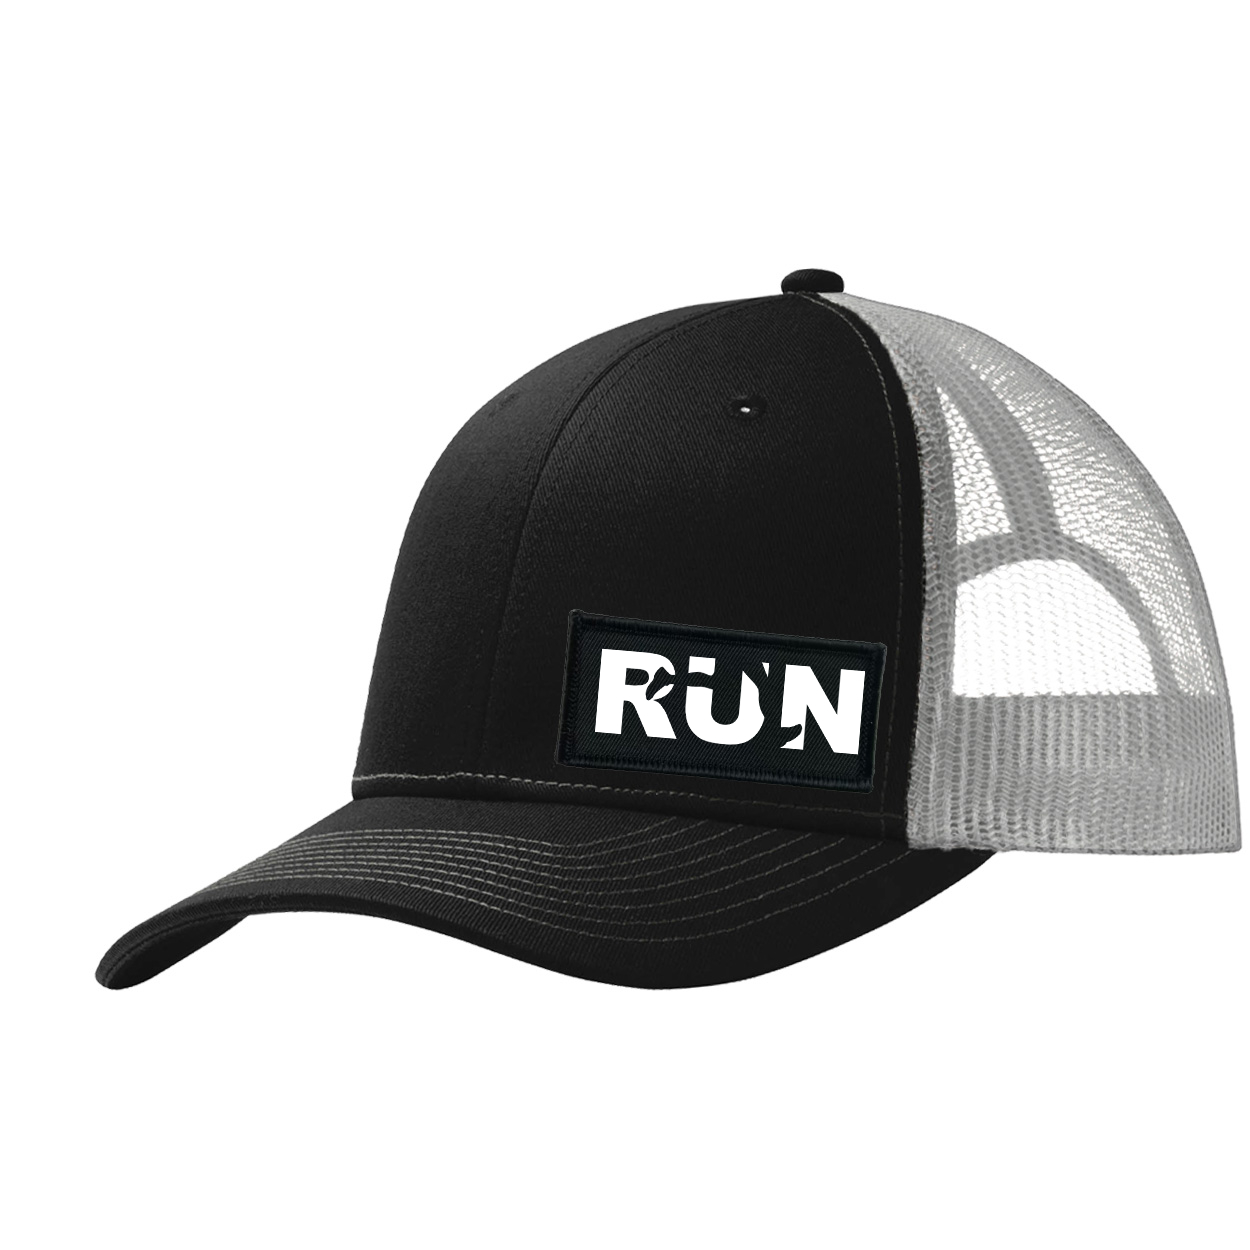 Run Jog Logo Night Out Woven Patch Snapback Trucker Hat Black/Gray